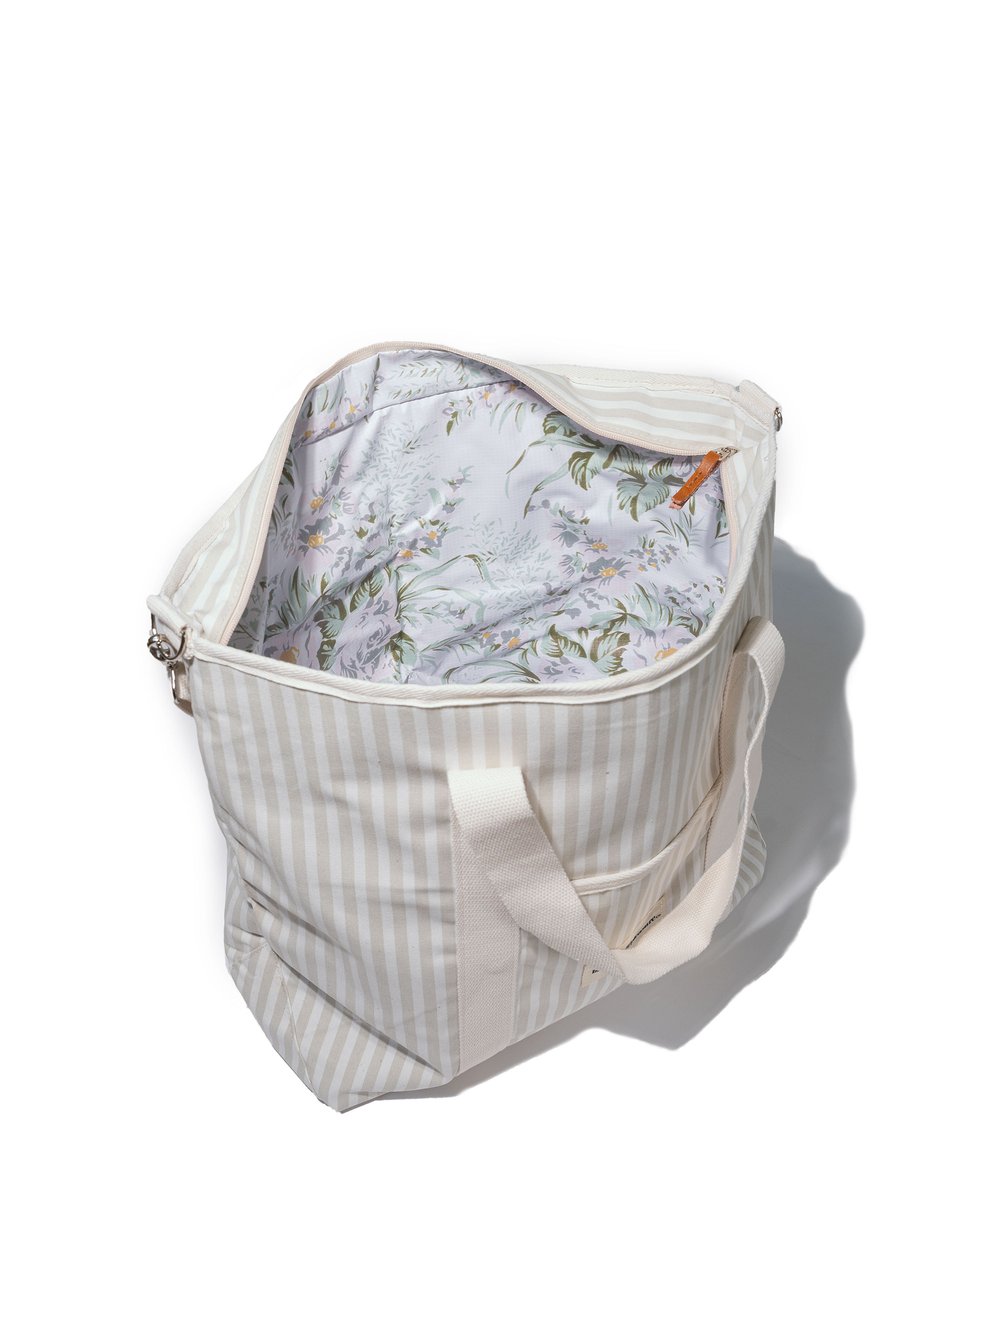 Business & Pleasure Co - The Cooler Tote Bag - Lauren's Sage Stripe